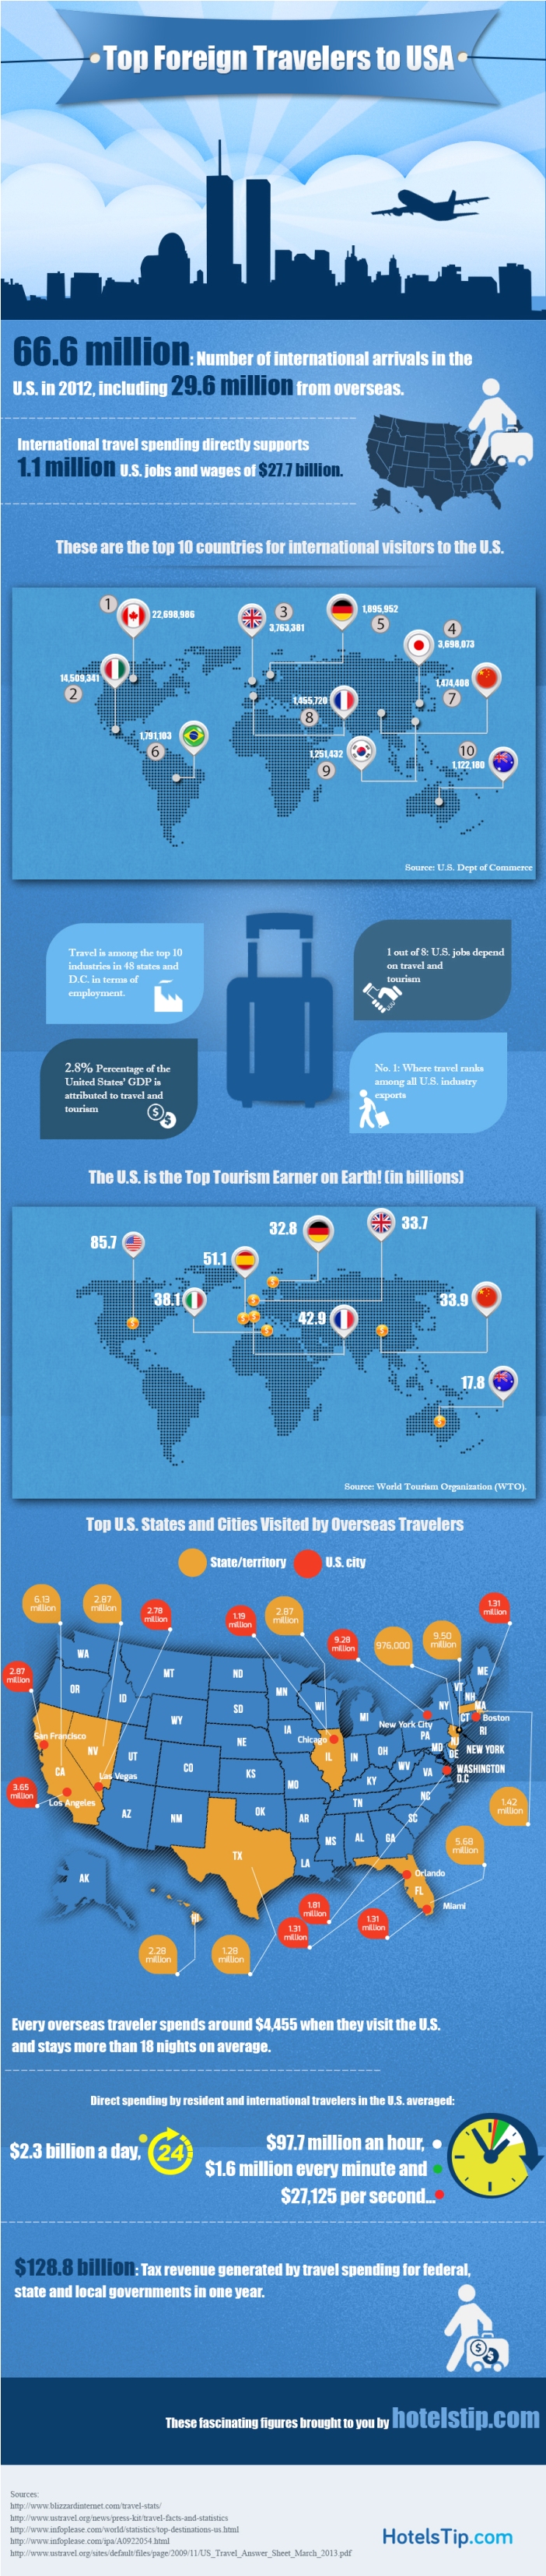 USA Traveler Stats